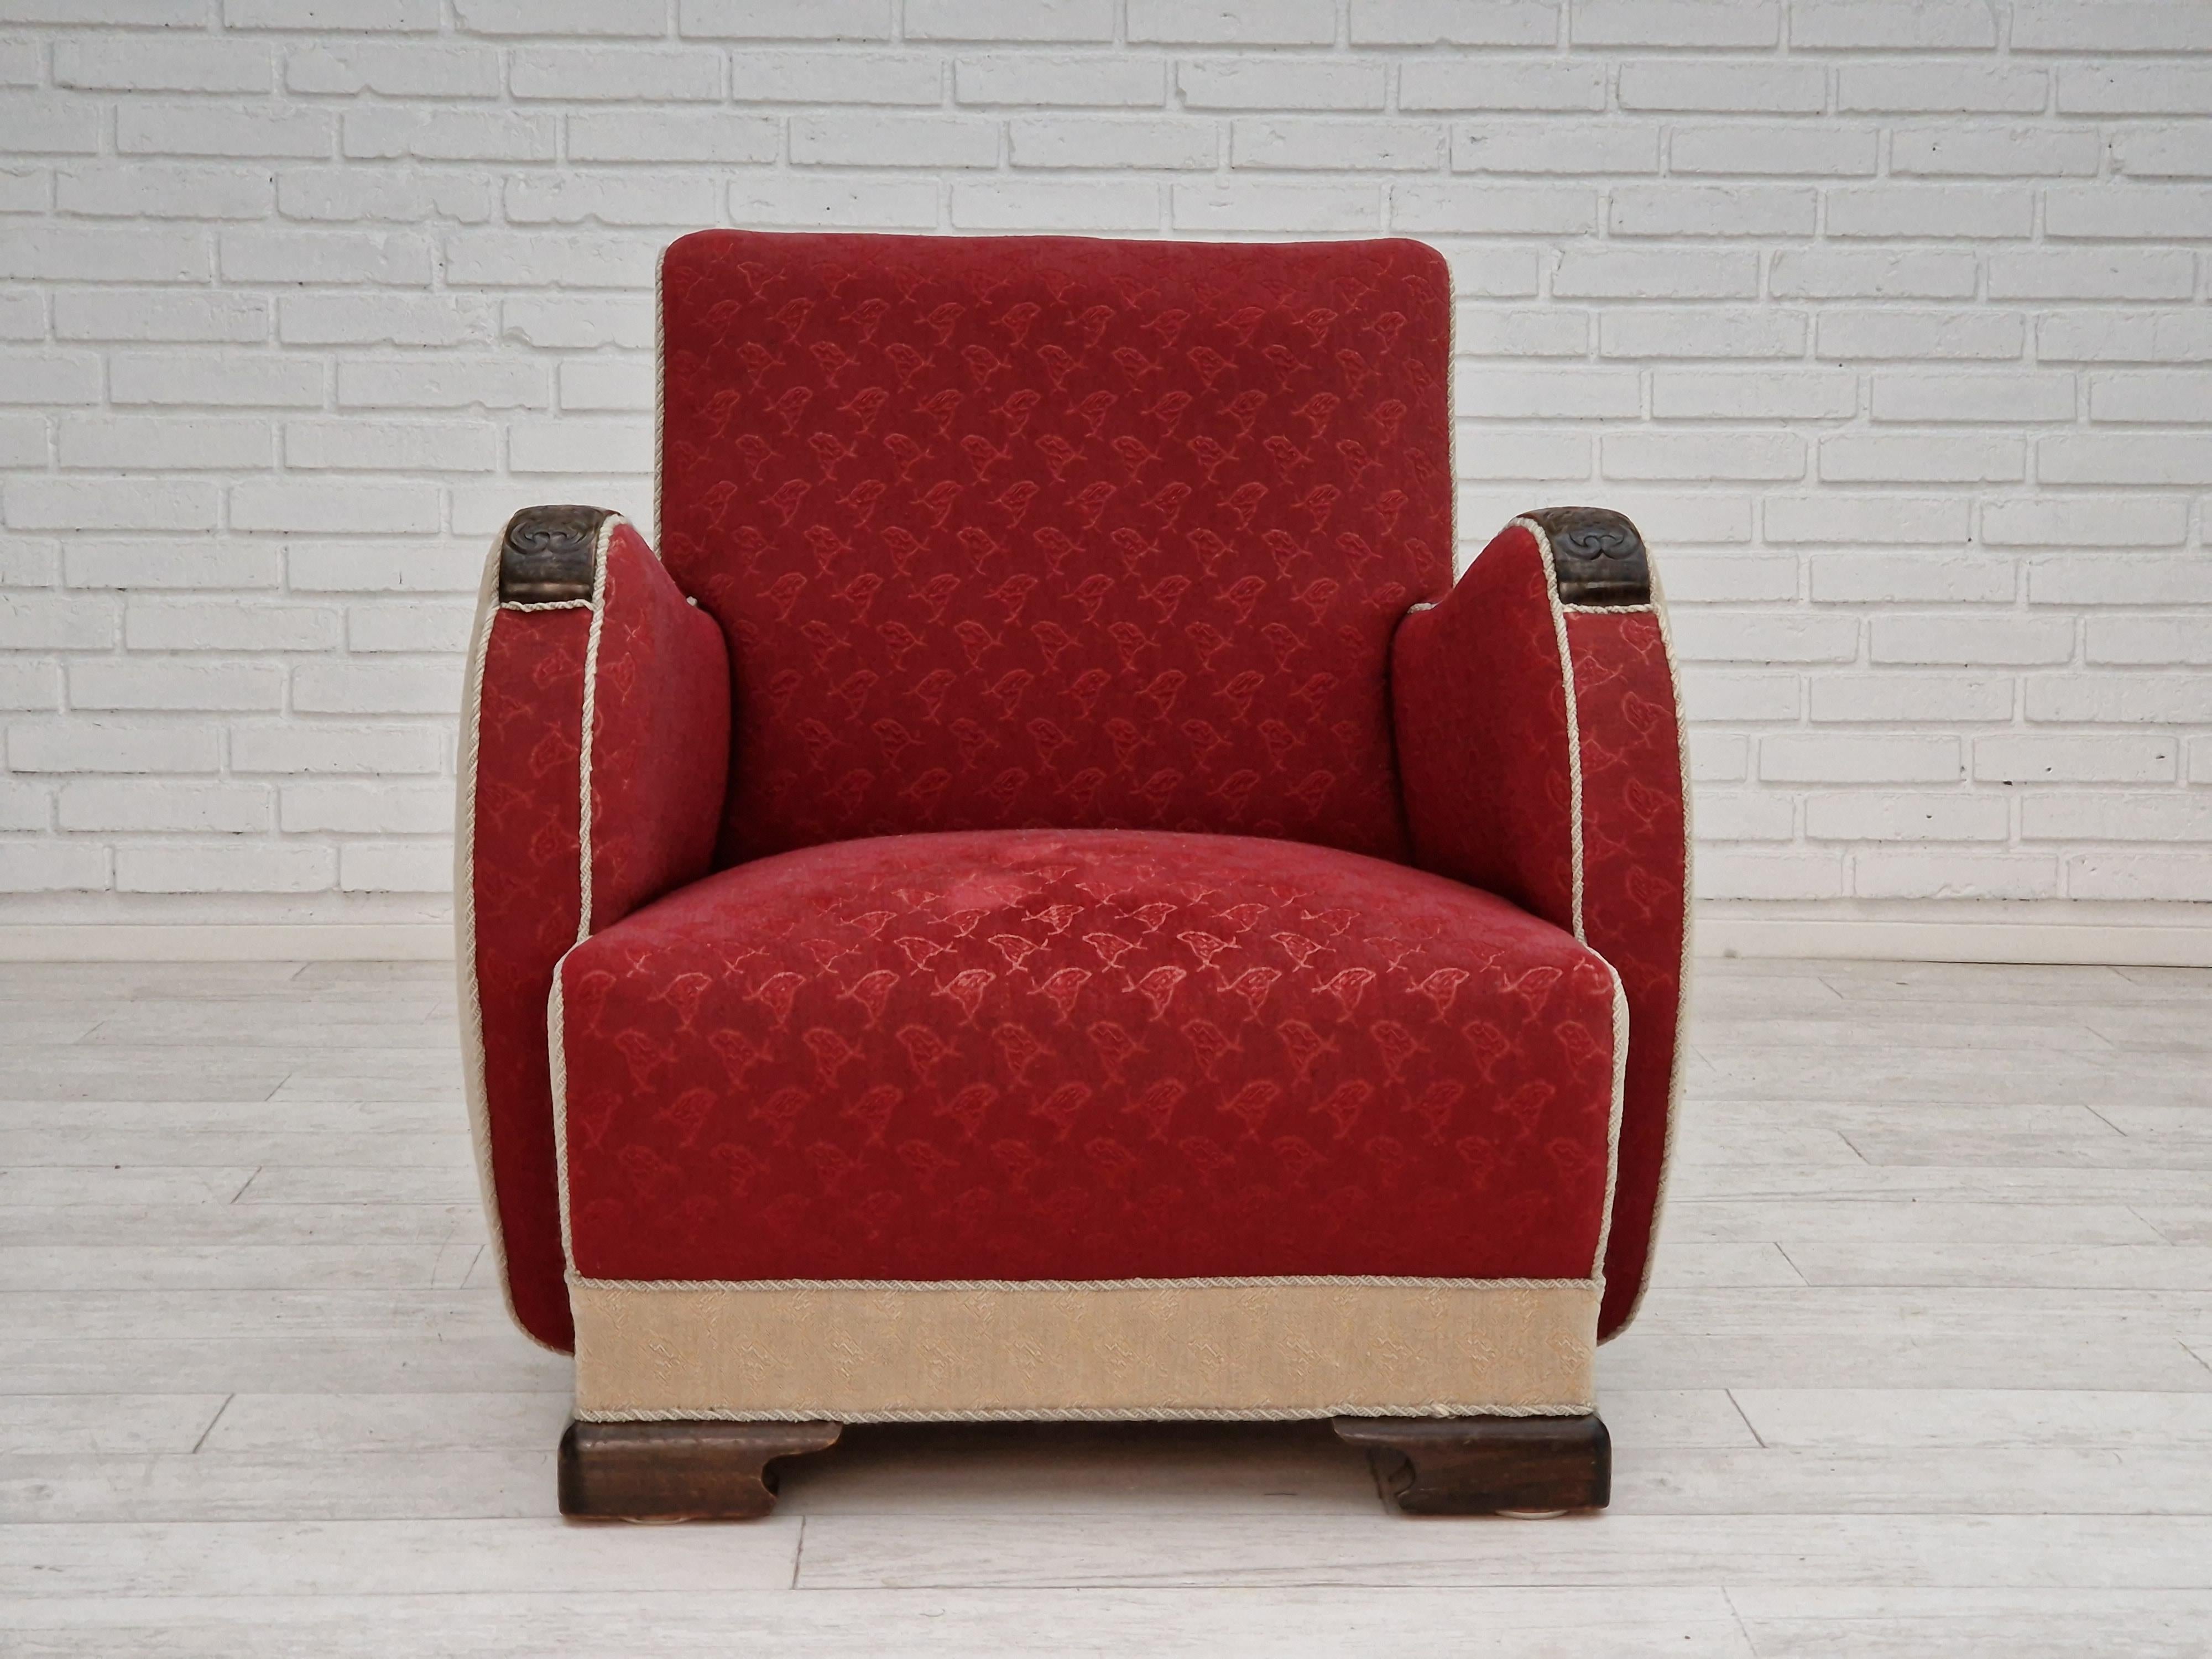 1950s, Scandinavian Art Deco Chairs, Original Condition For Sale 4